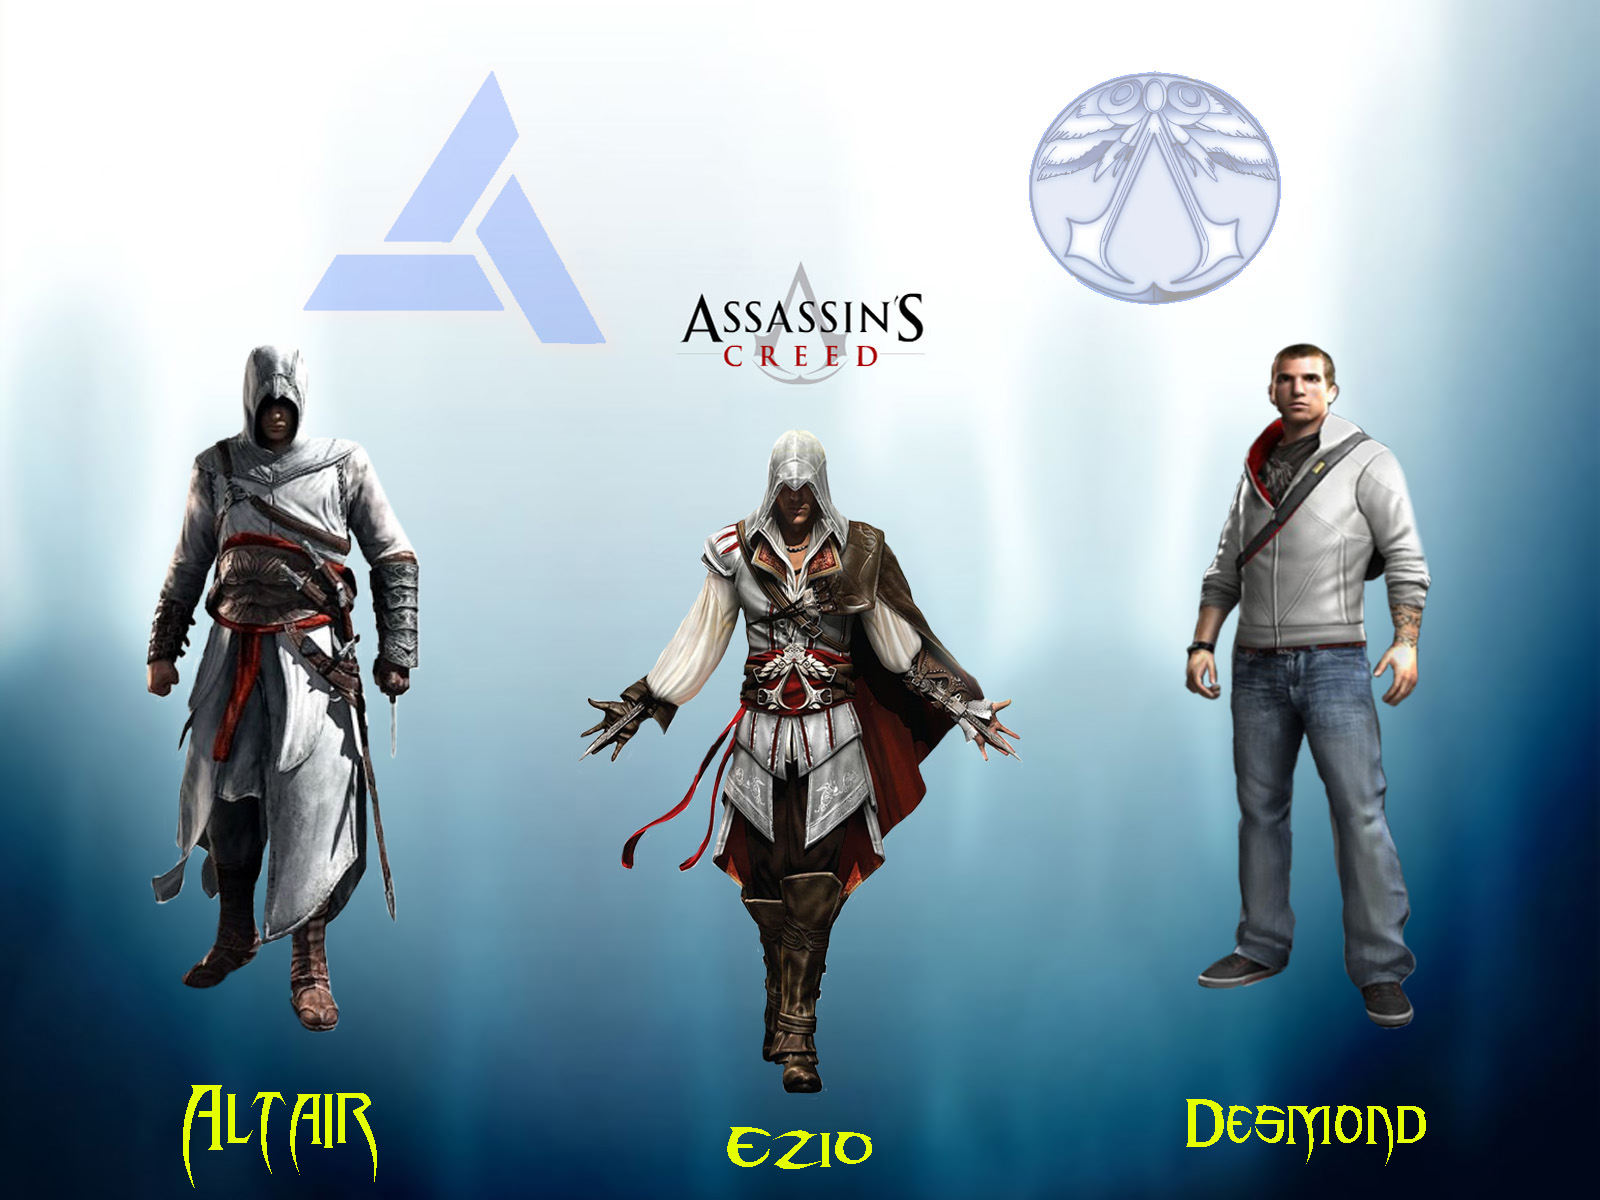 Задание найти ассасина. Хронология Assassins Creed. Имена всех ассасинов. Части ассасина. Все ассасины имена.